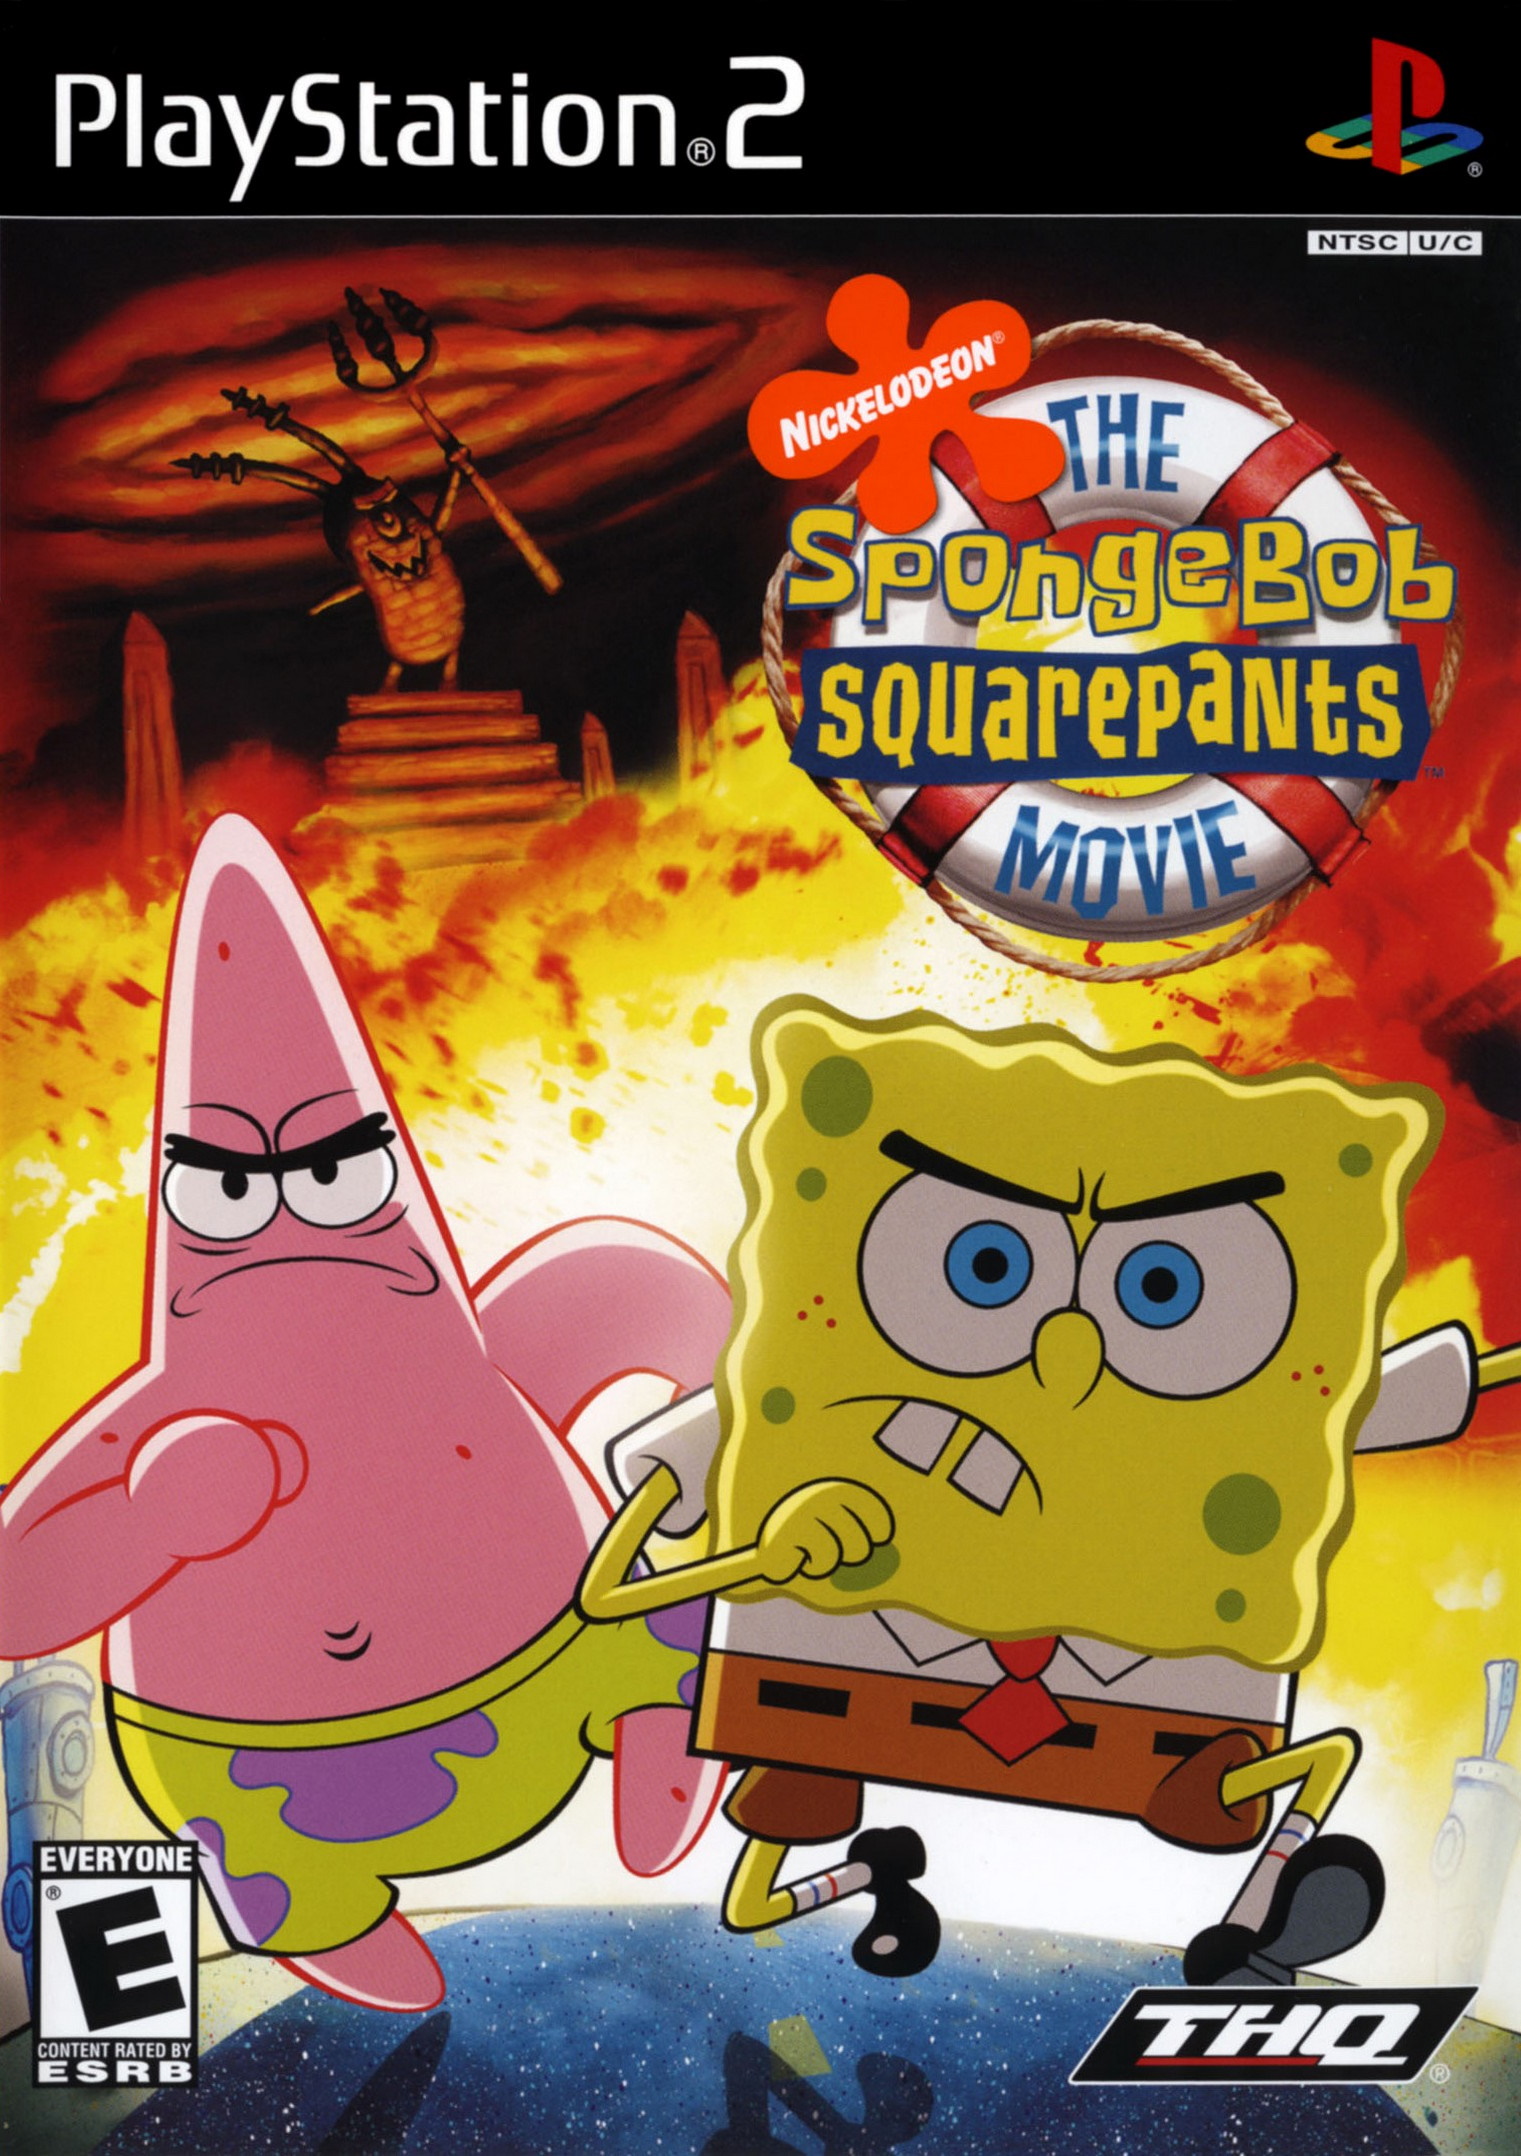 spongebob squarepants movie pc chapters